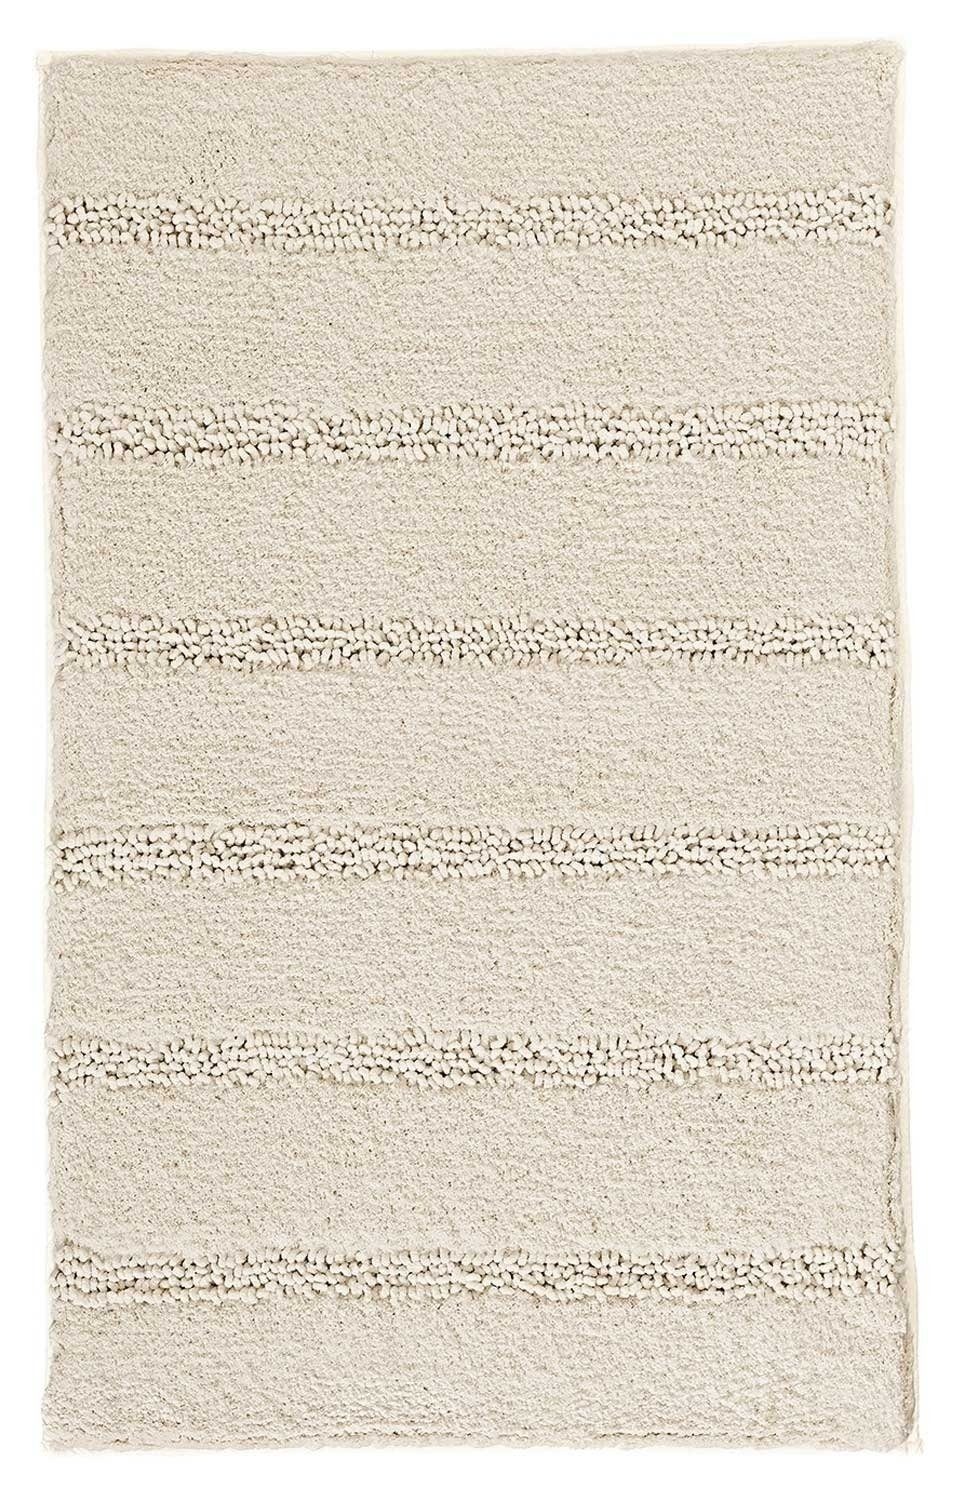 Badematte MONROVIA, Beige, 100 x 60 cm, Muster, Höhe 23 mm, rutschhemmend beschichtet, fußbodenheizungsgeeignet, Polyester, rechteckig, waschbar sand/beige